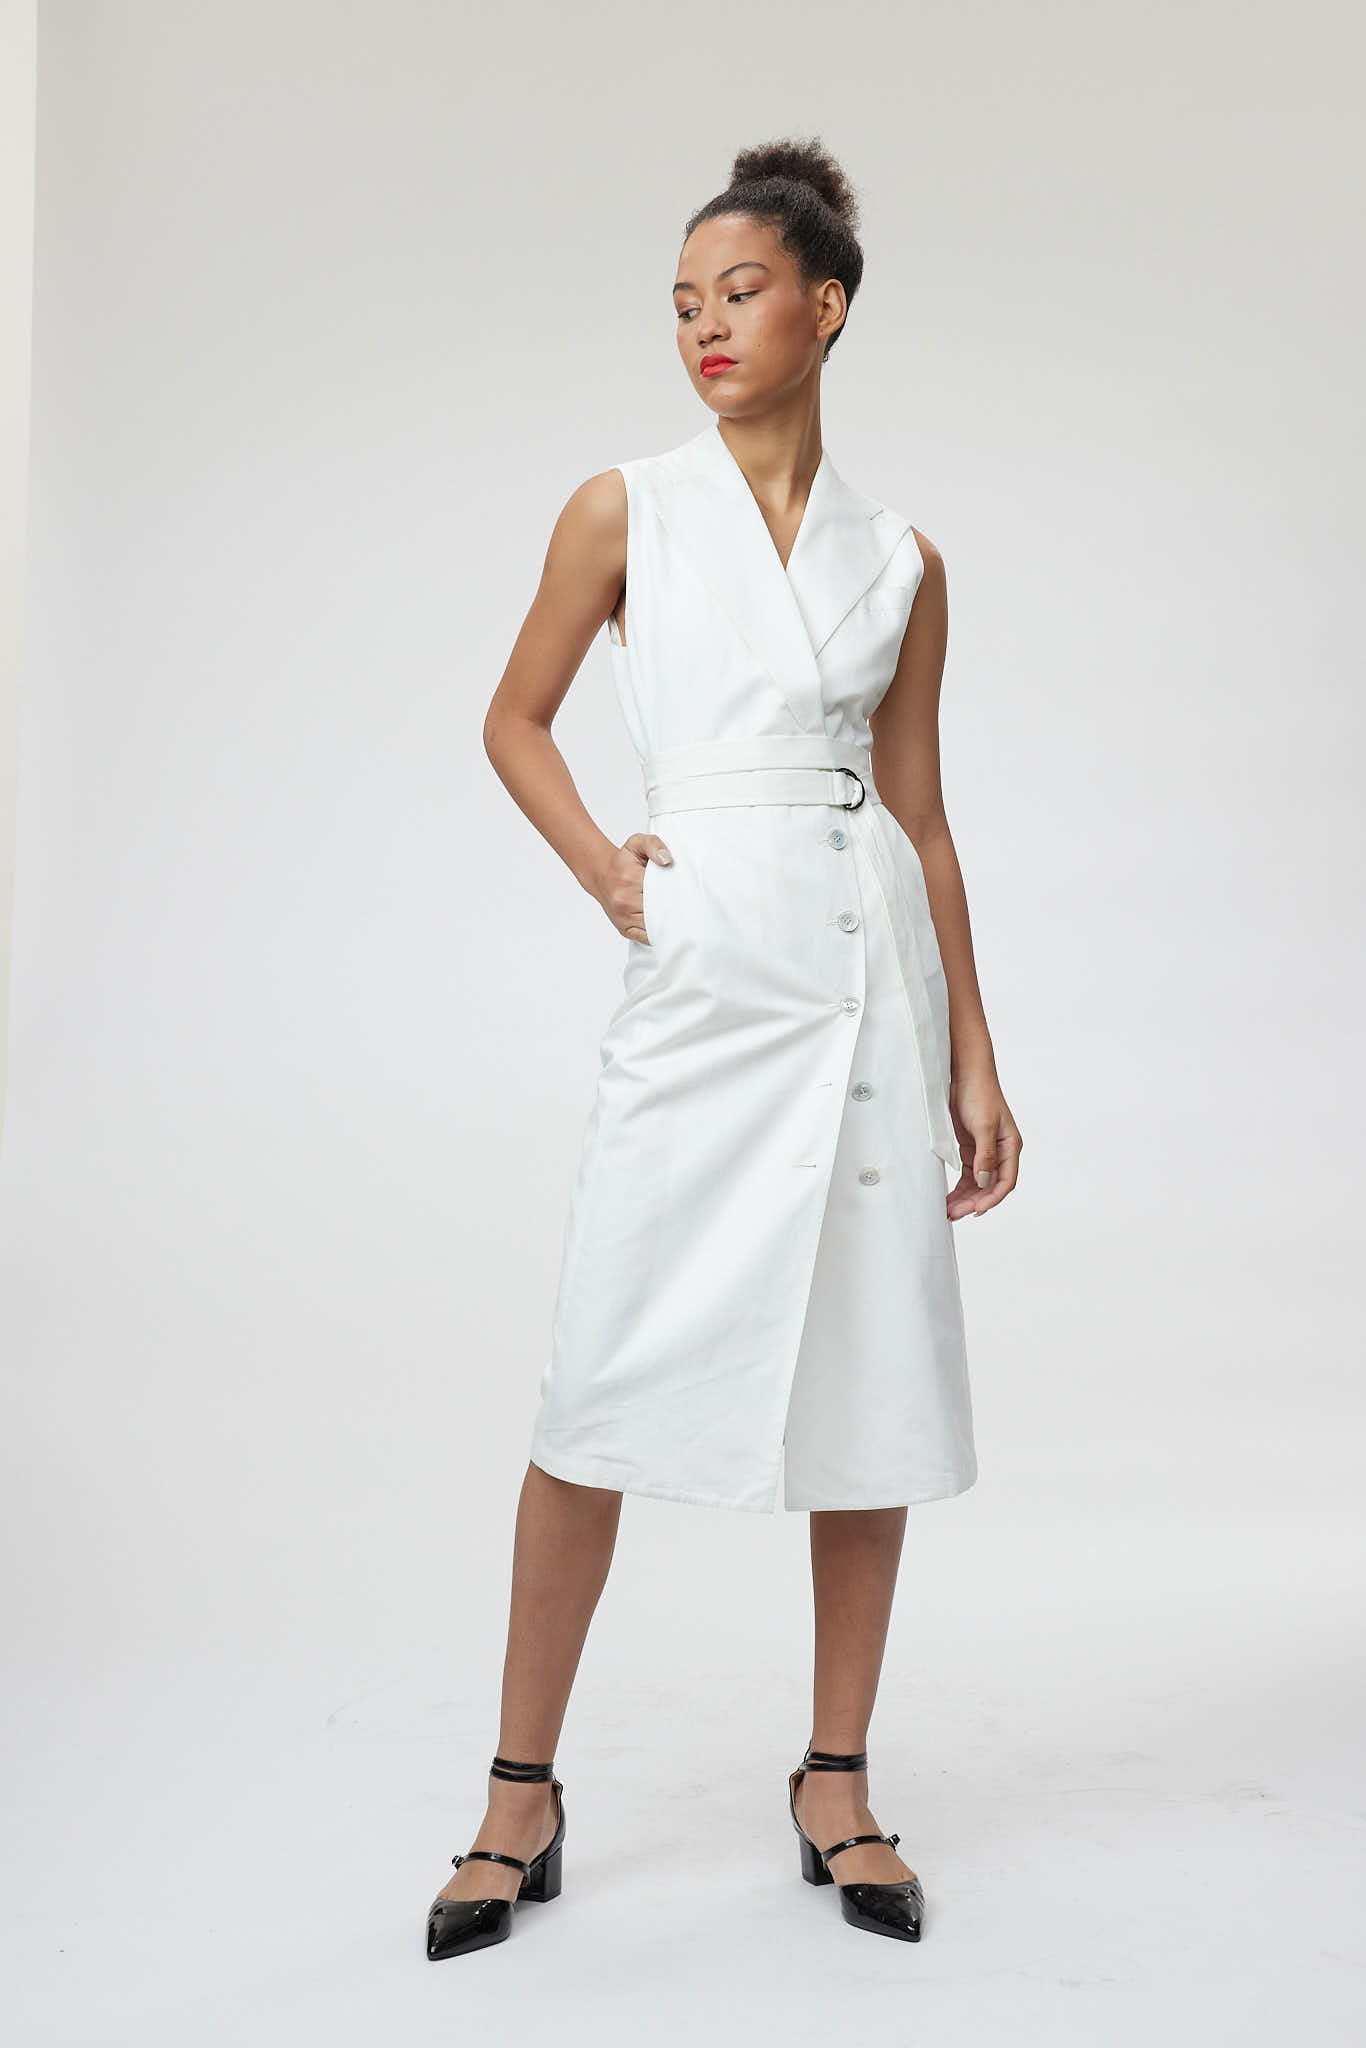 Pavia Dress – Tailored sleeveless dress in white